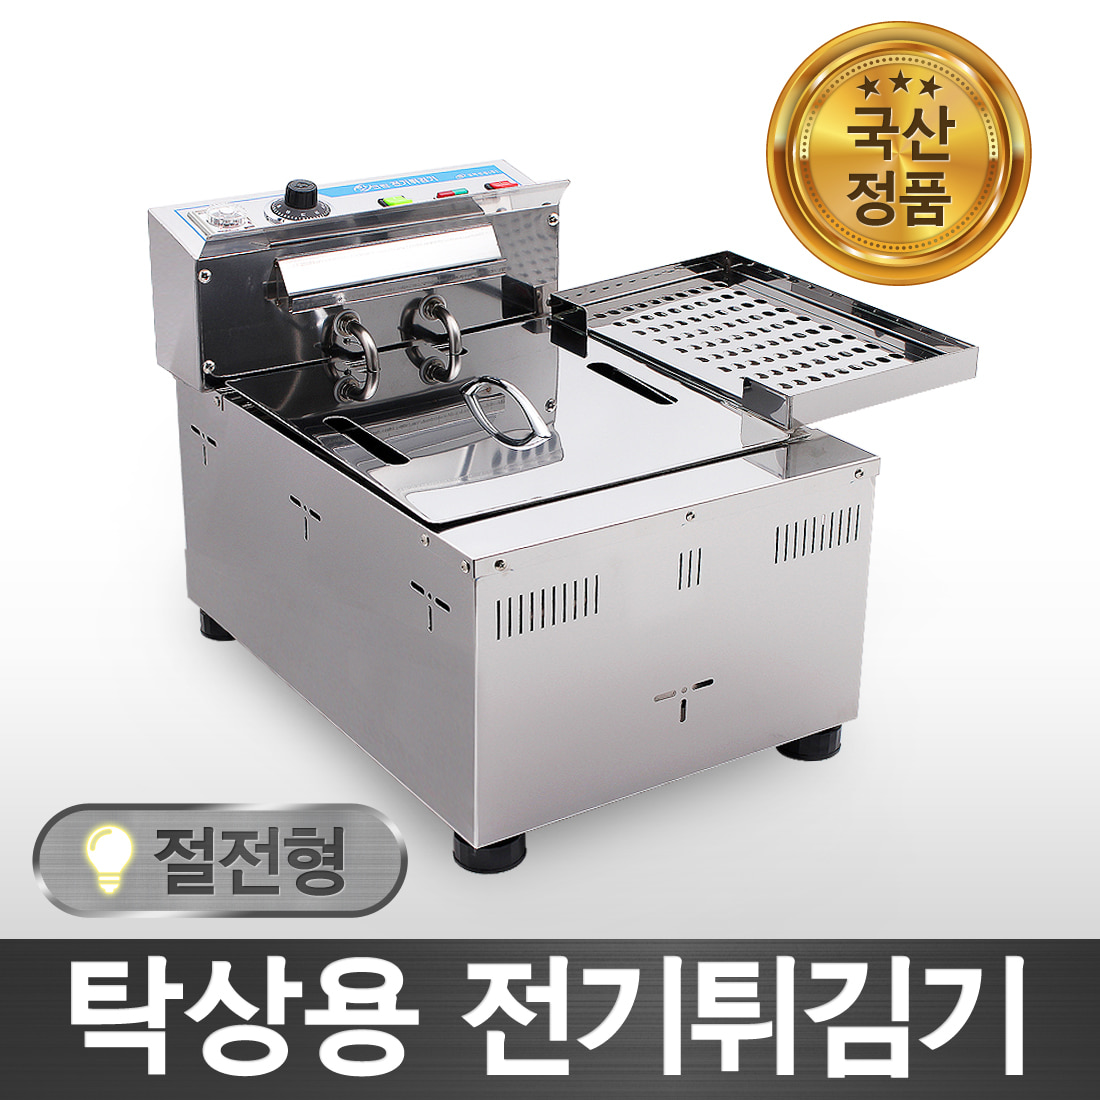 MSKOREA 업소용 전기 튀김기 MSM-100T 탁상용 튀김 기계 소형 영업용